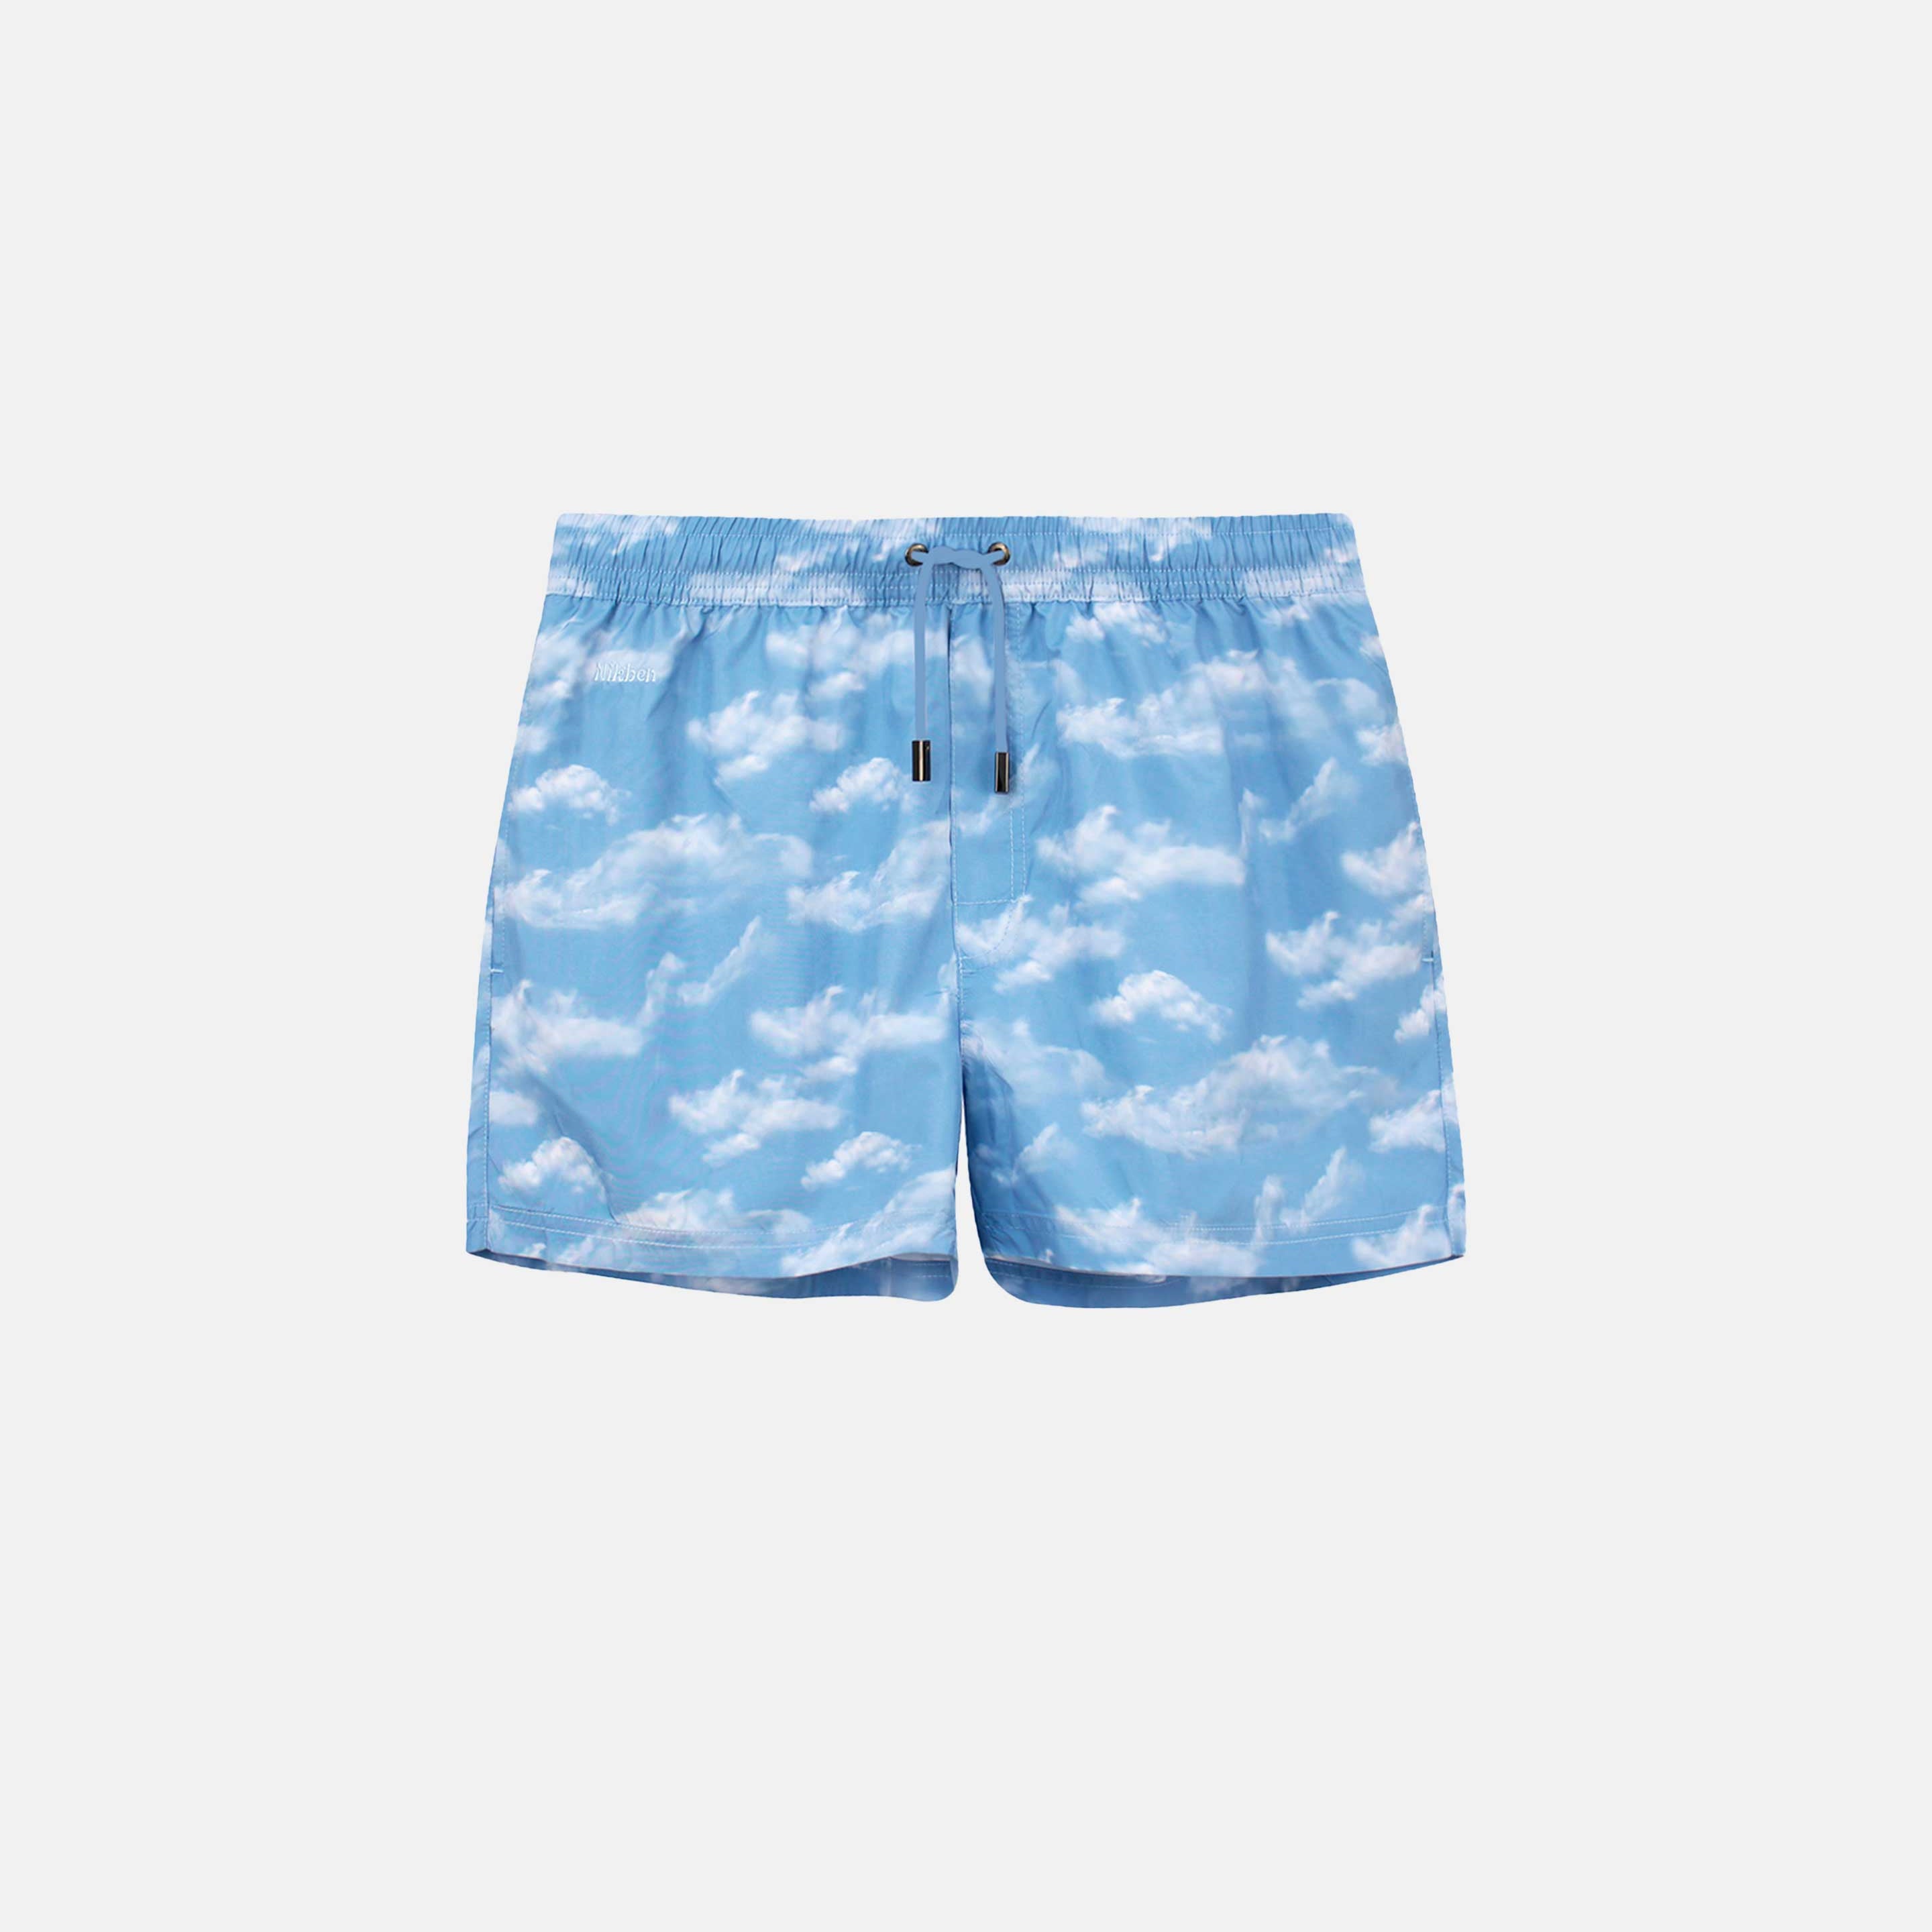 Light blue swim trunks with cloud print, logo and drawstring